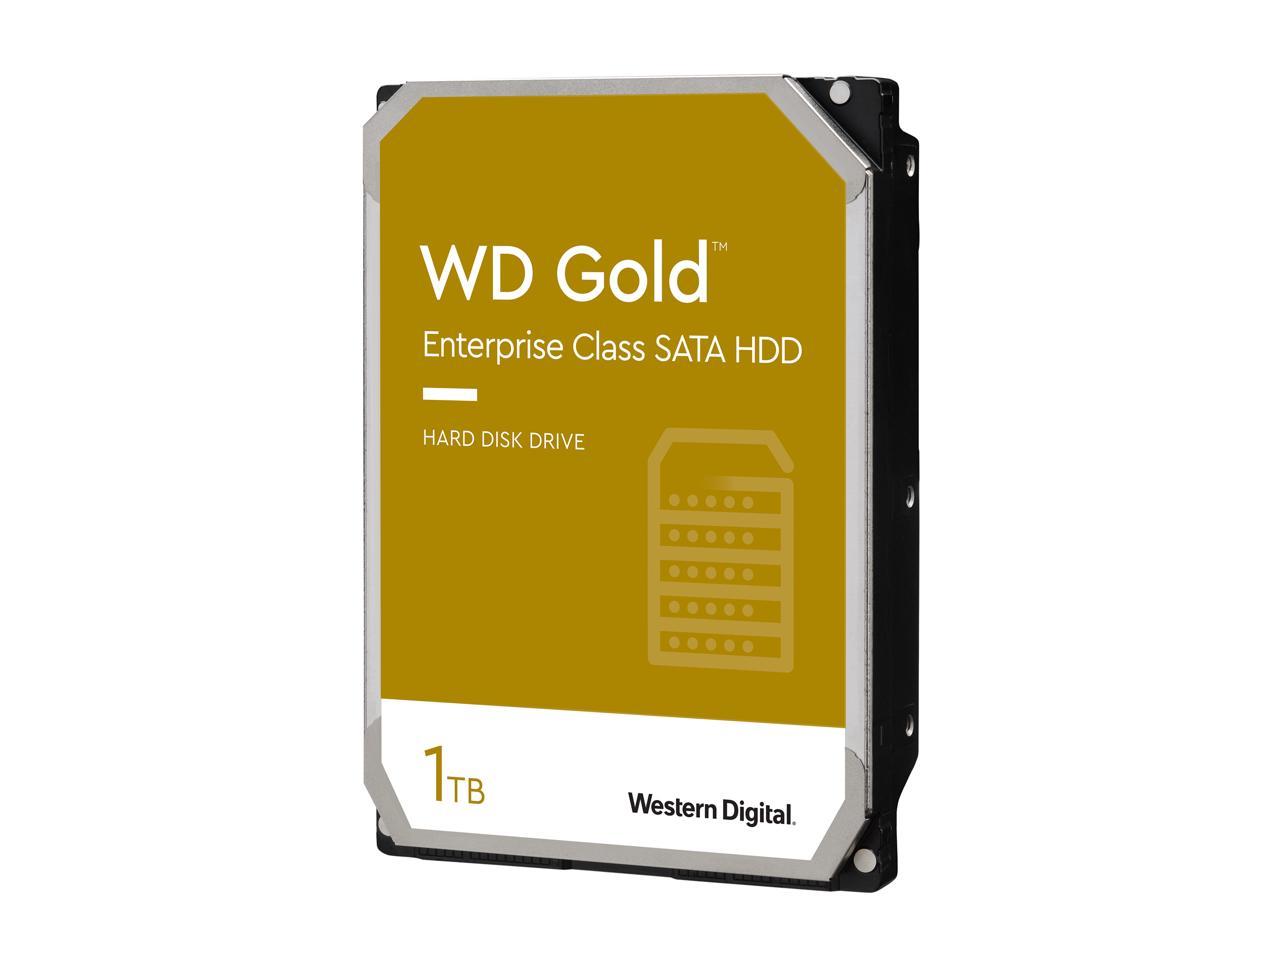 Wd Gold 1Tb Enterprise Class Hard Disk Drive - 7200 Rpm Class Sata 6Gb/S 128Mb Cache 3.5 Inch - Wd1005Fbyz